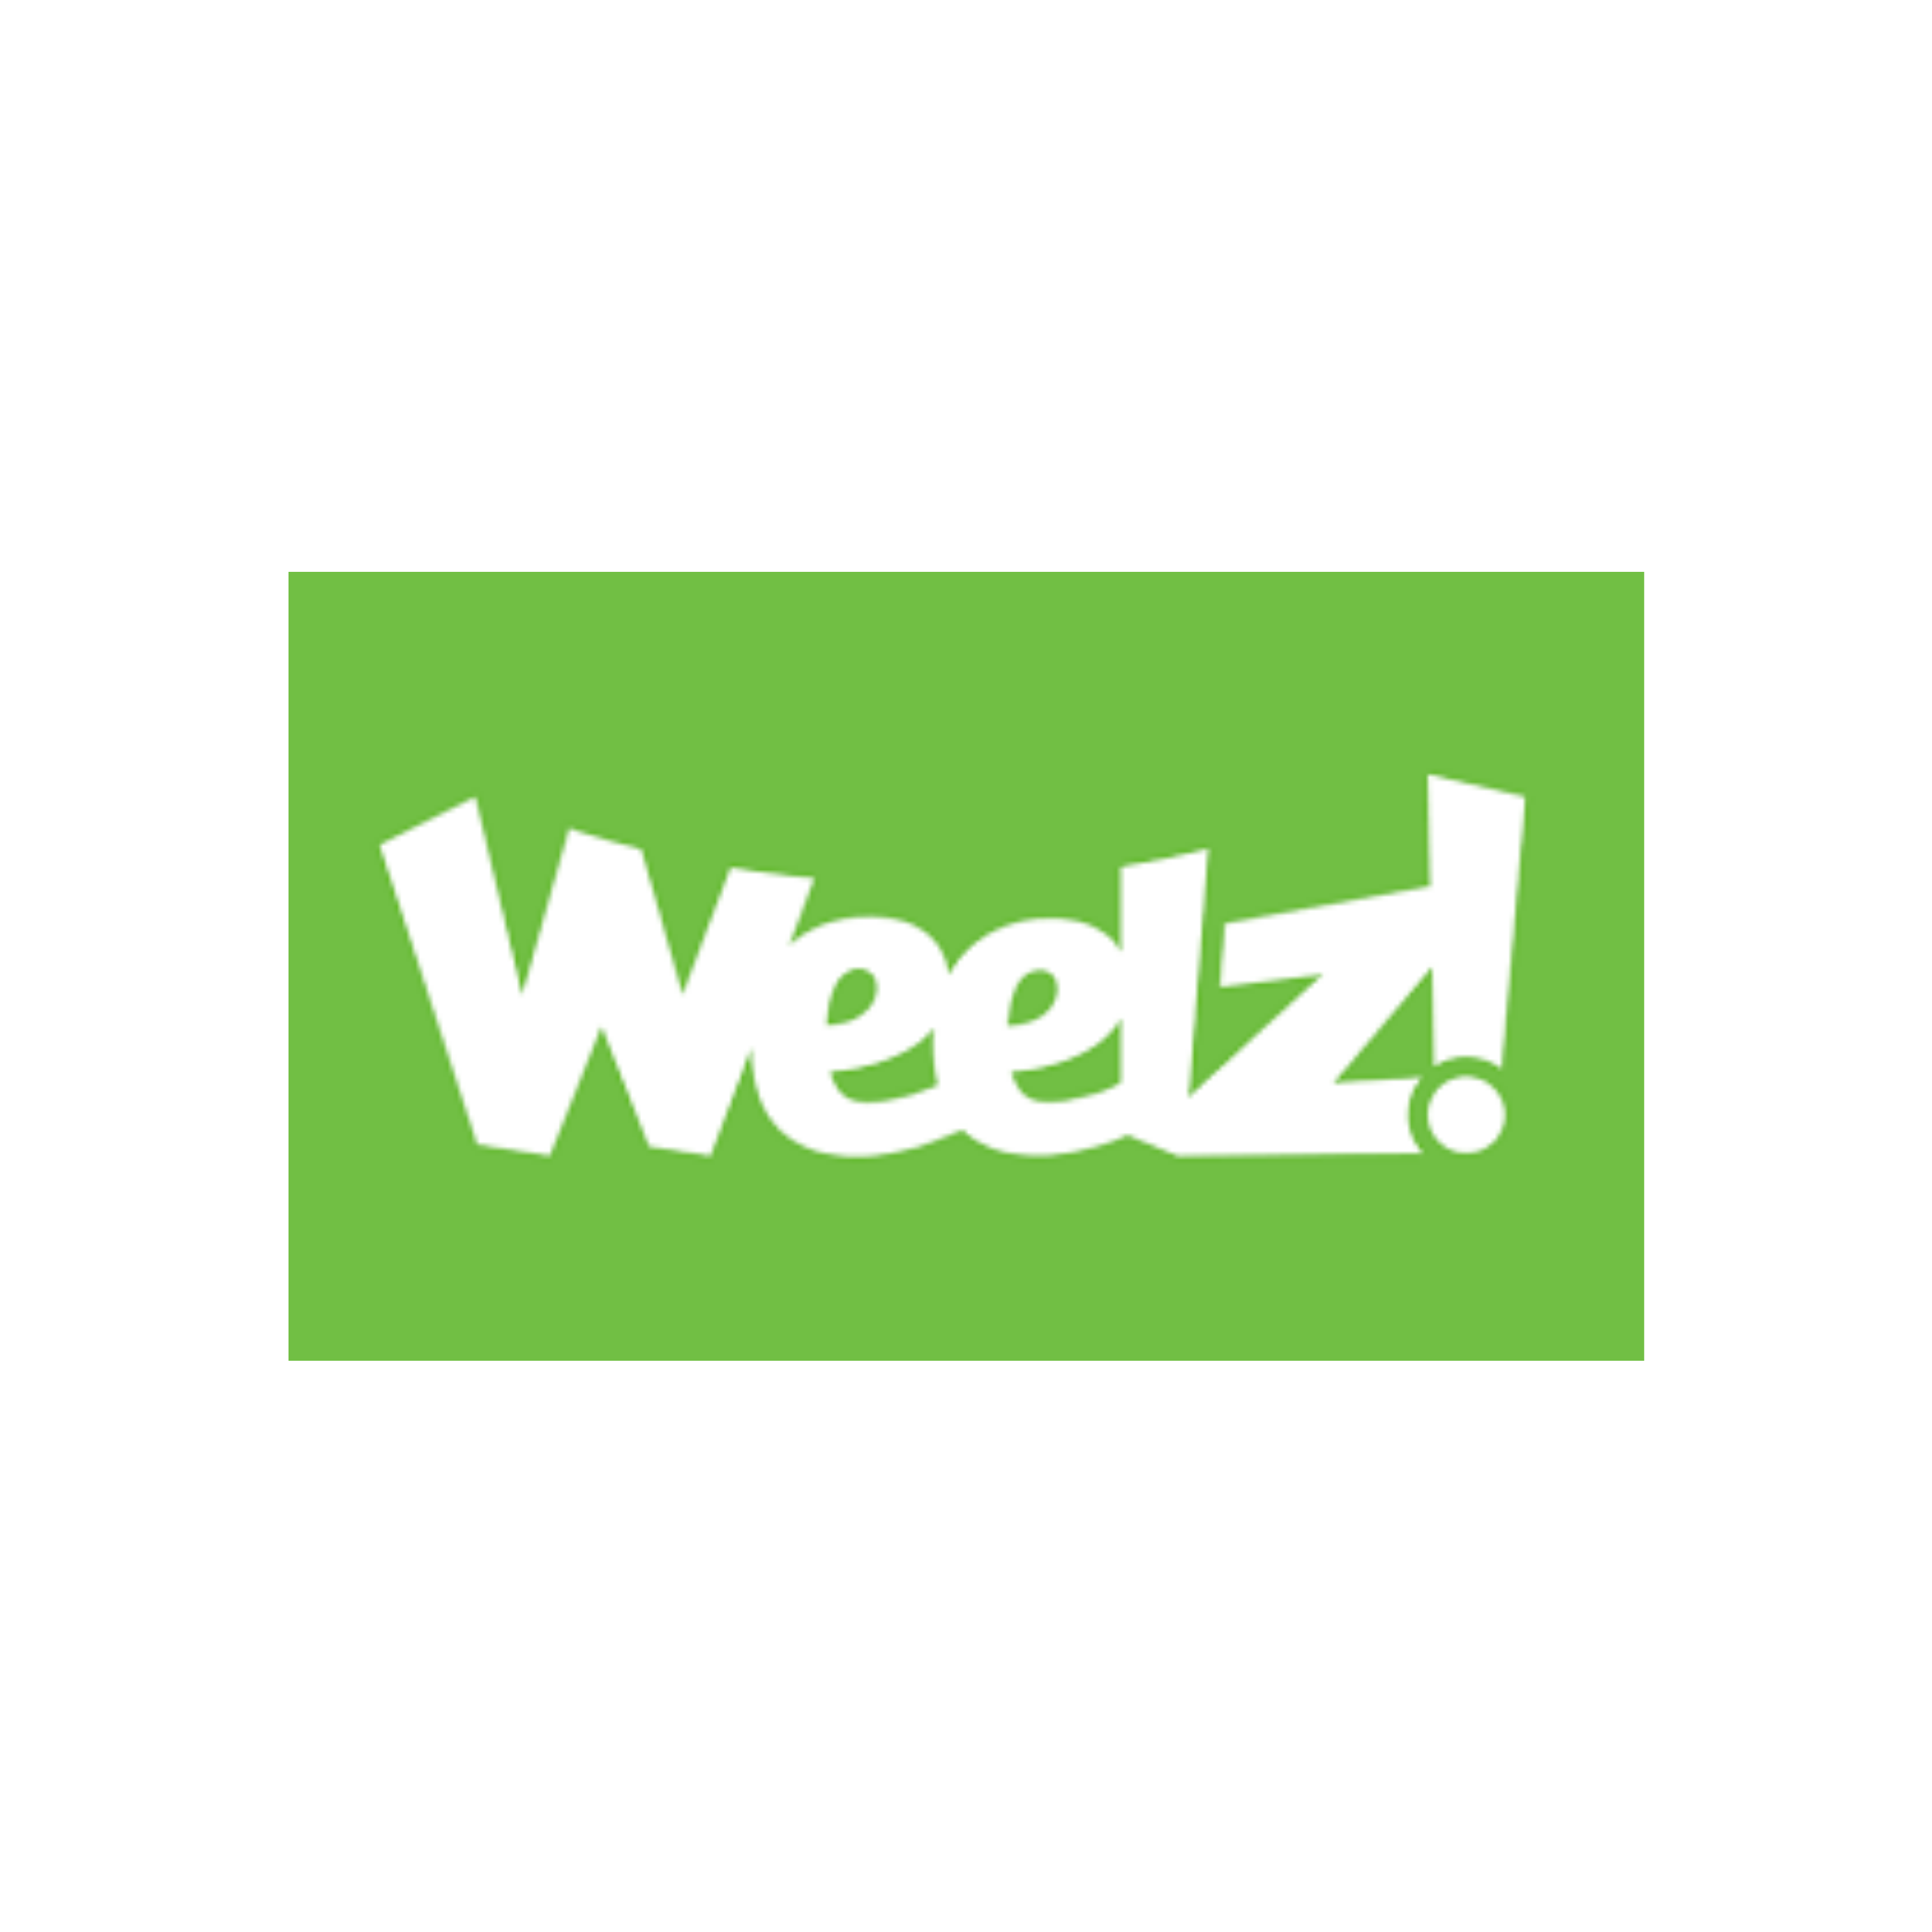 Weelz logo png